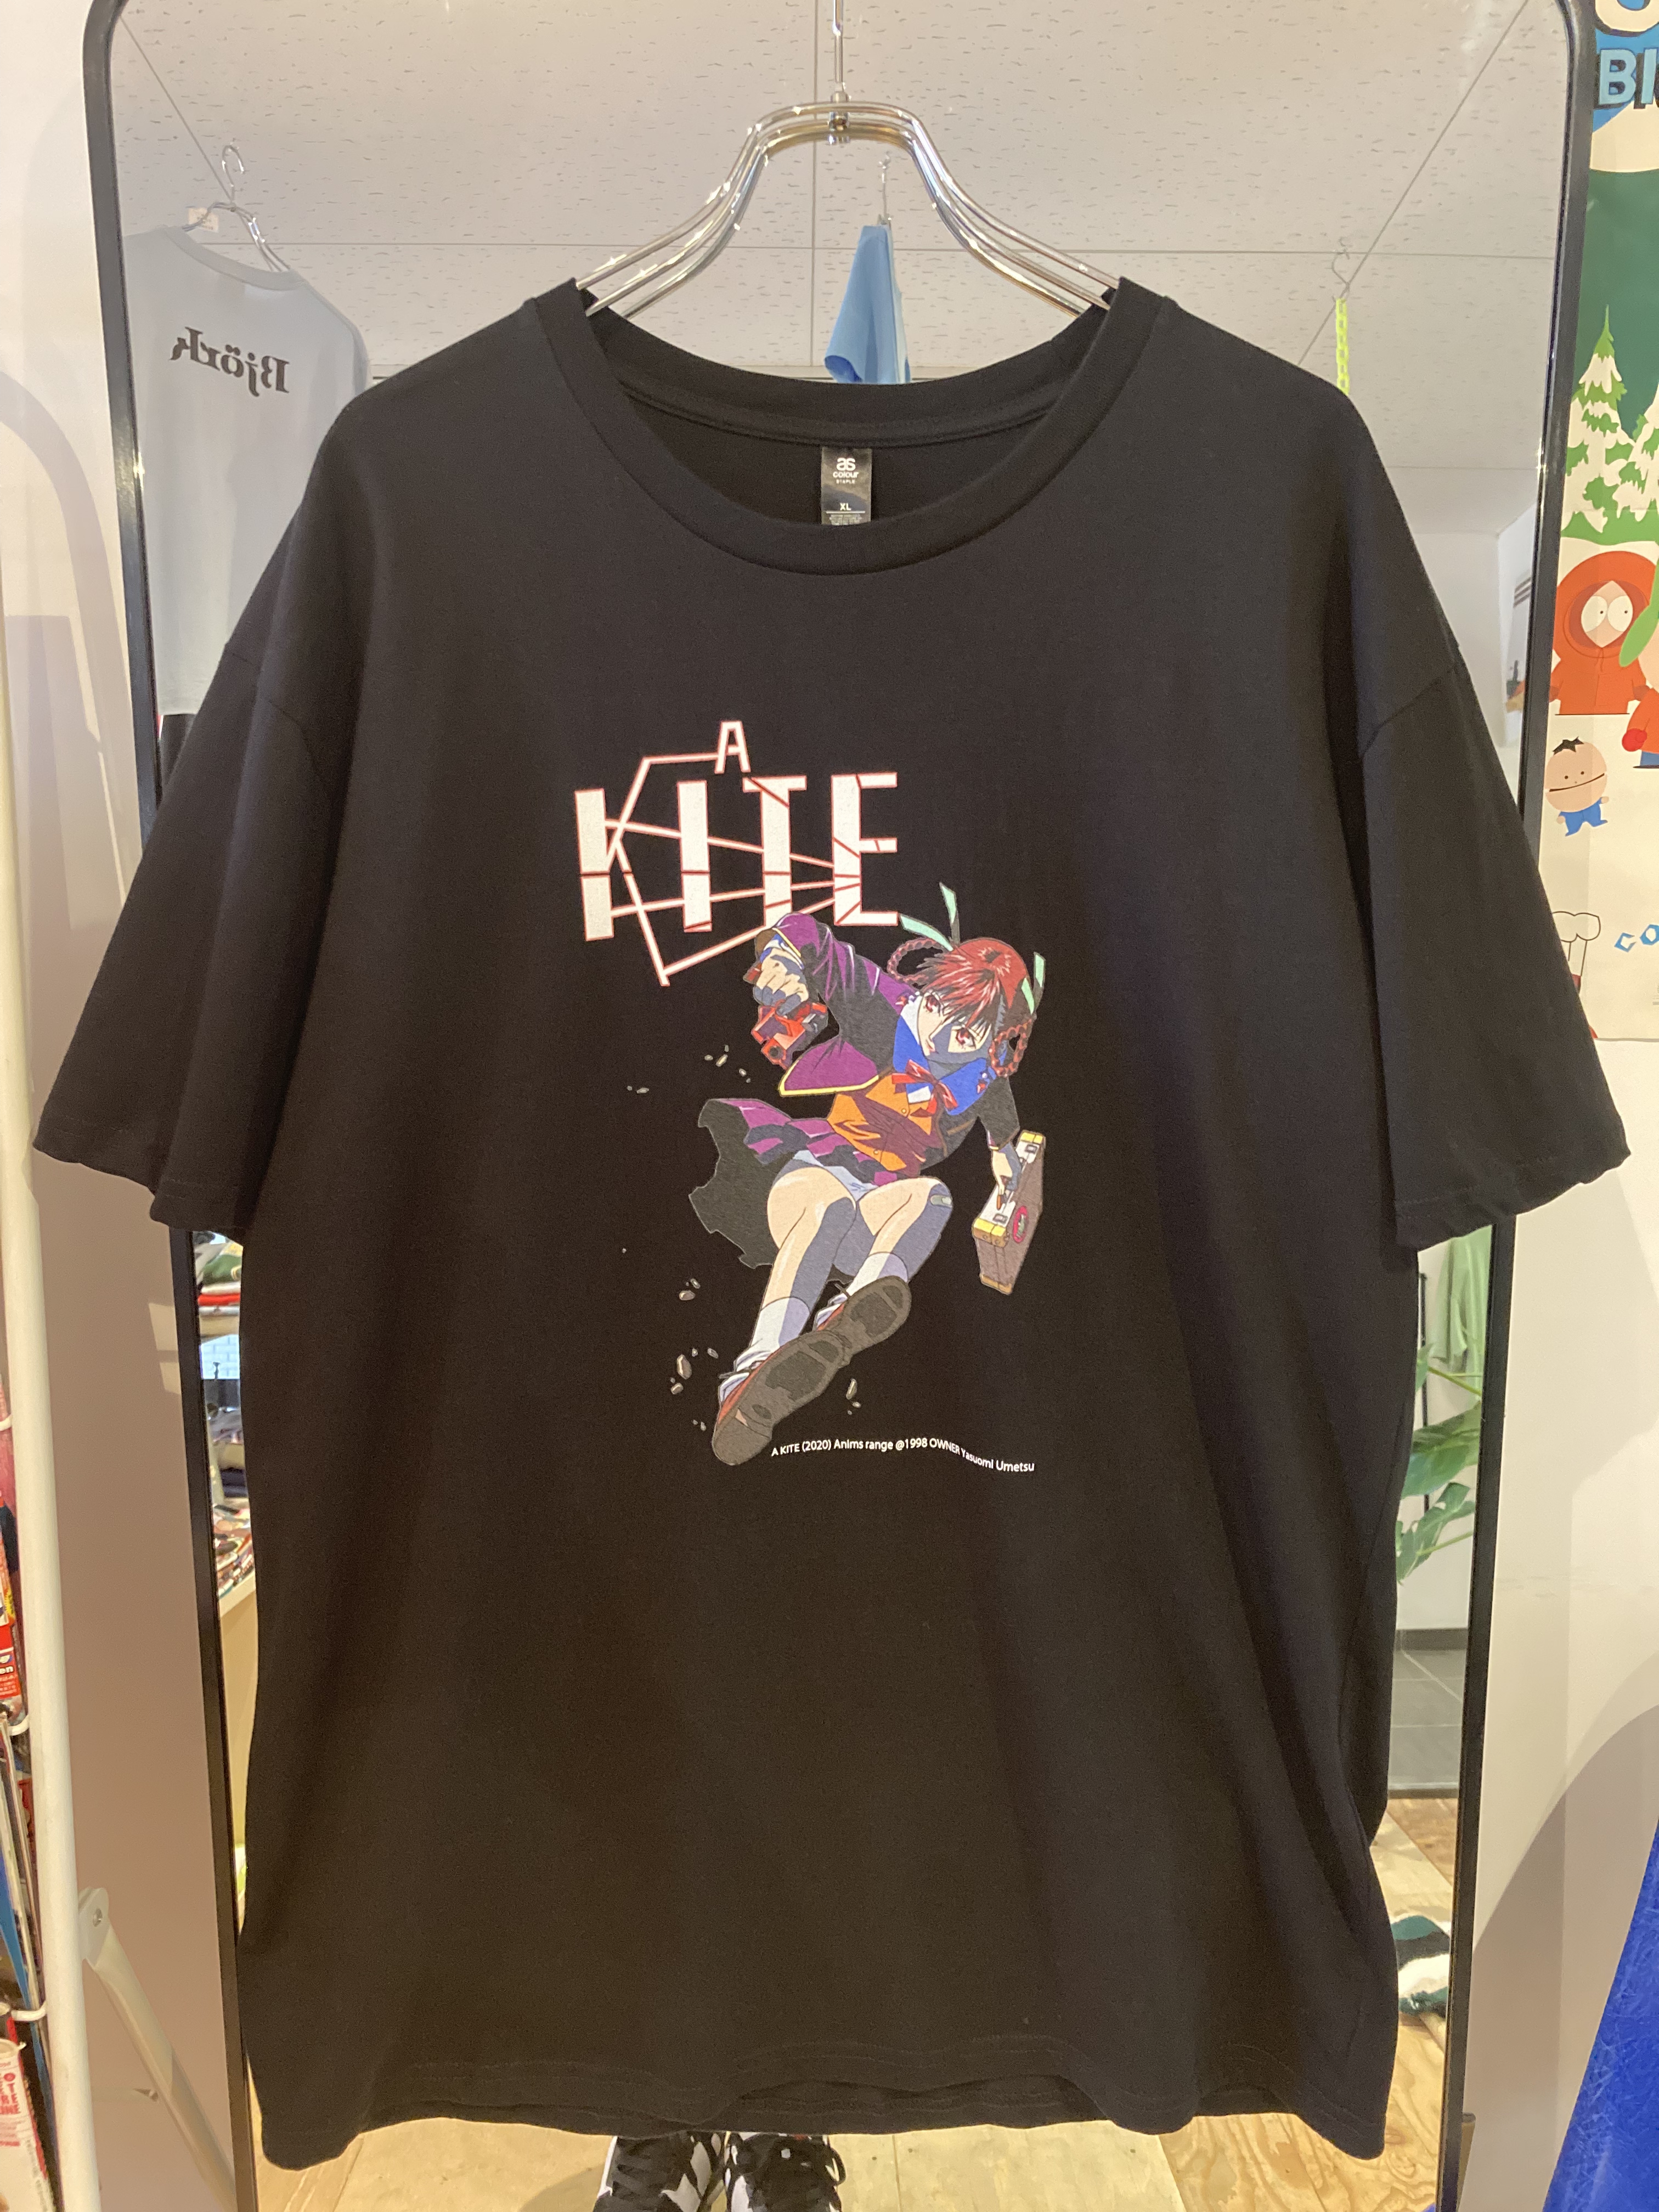 A KITE カイトvintage tシャツアニメtシャツ